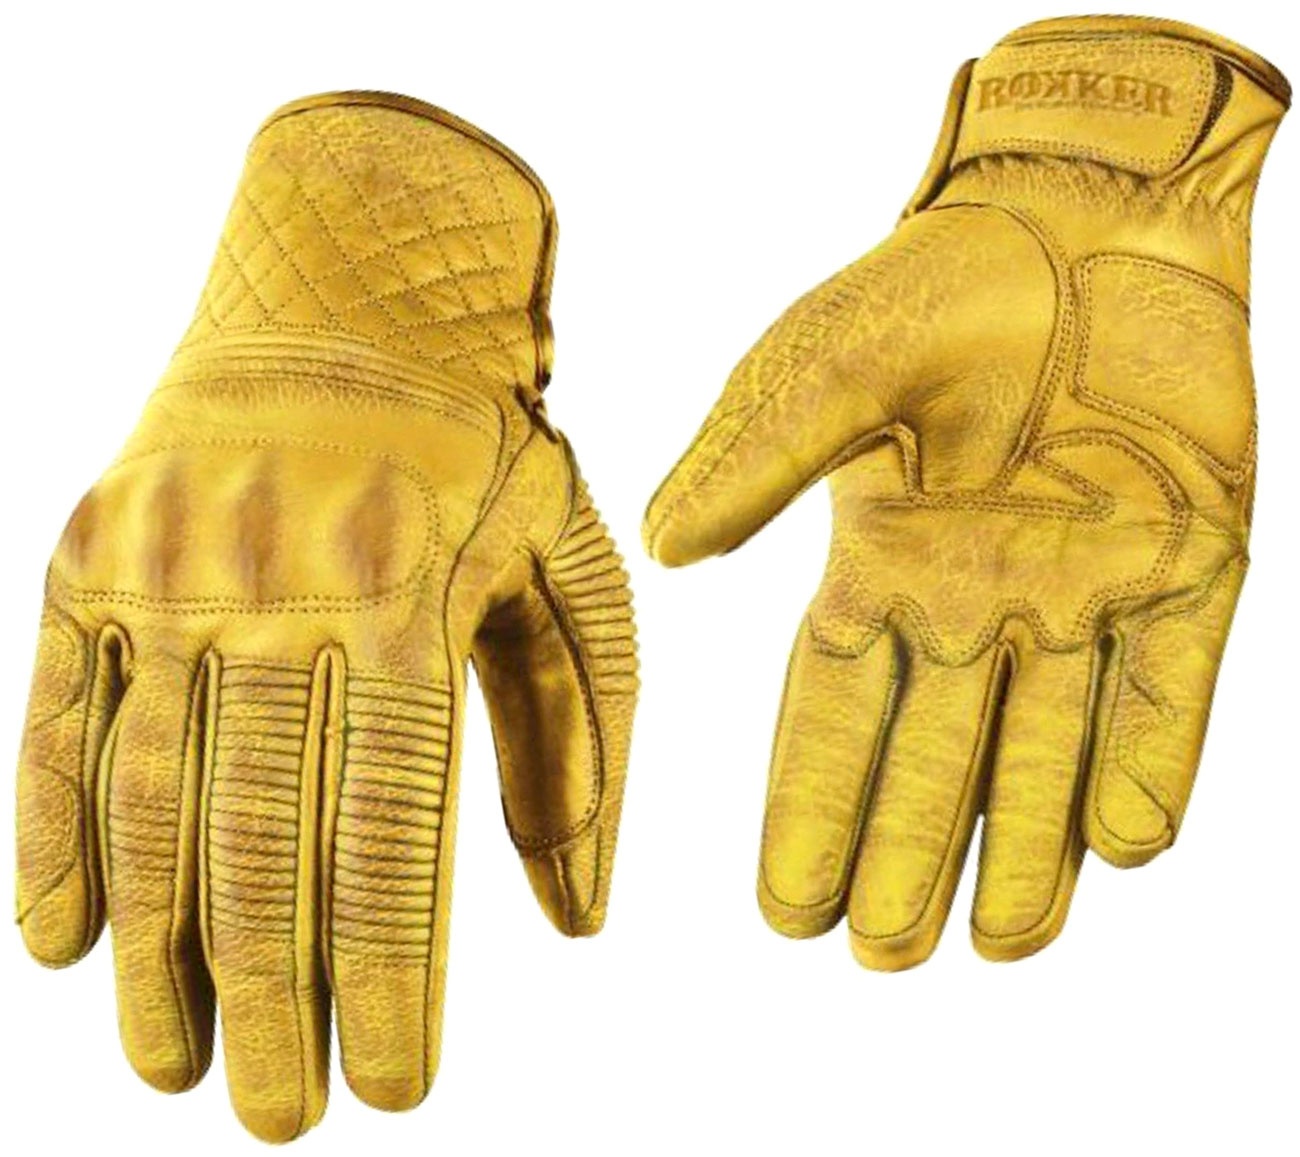 Rokker Tucson, gants - Jaune - 3XL